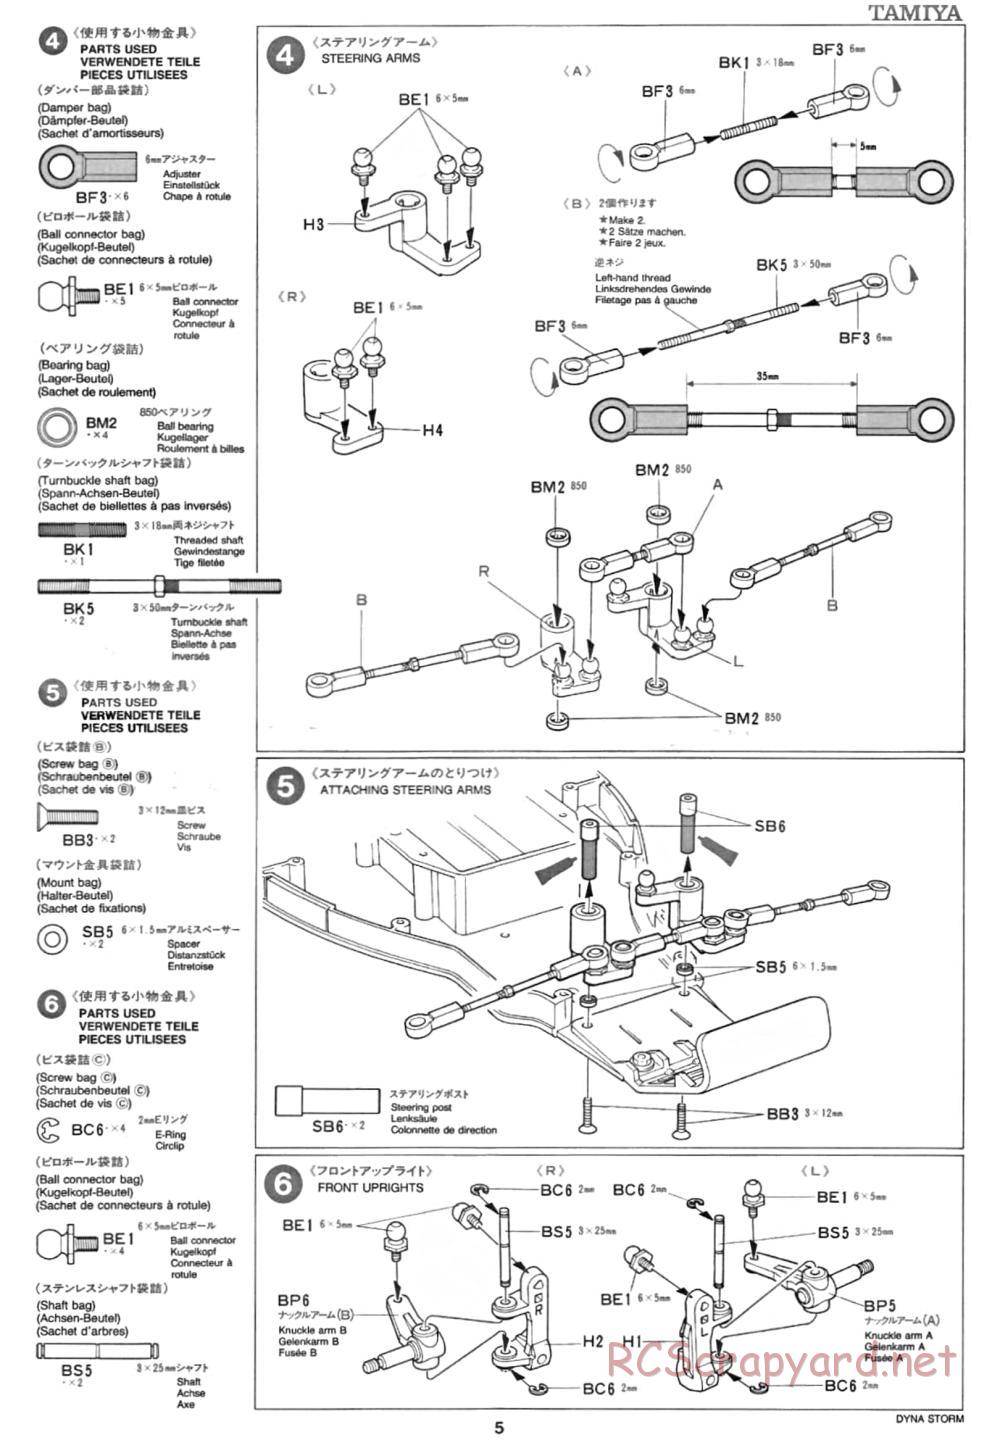 Tamiya - Dyna Storm Chassis - Manual - Page 5